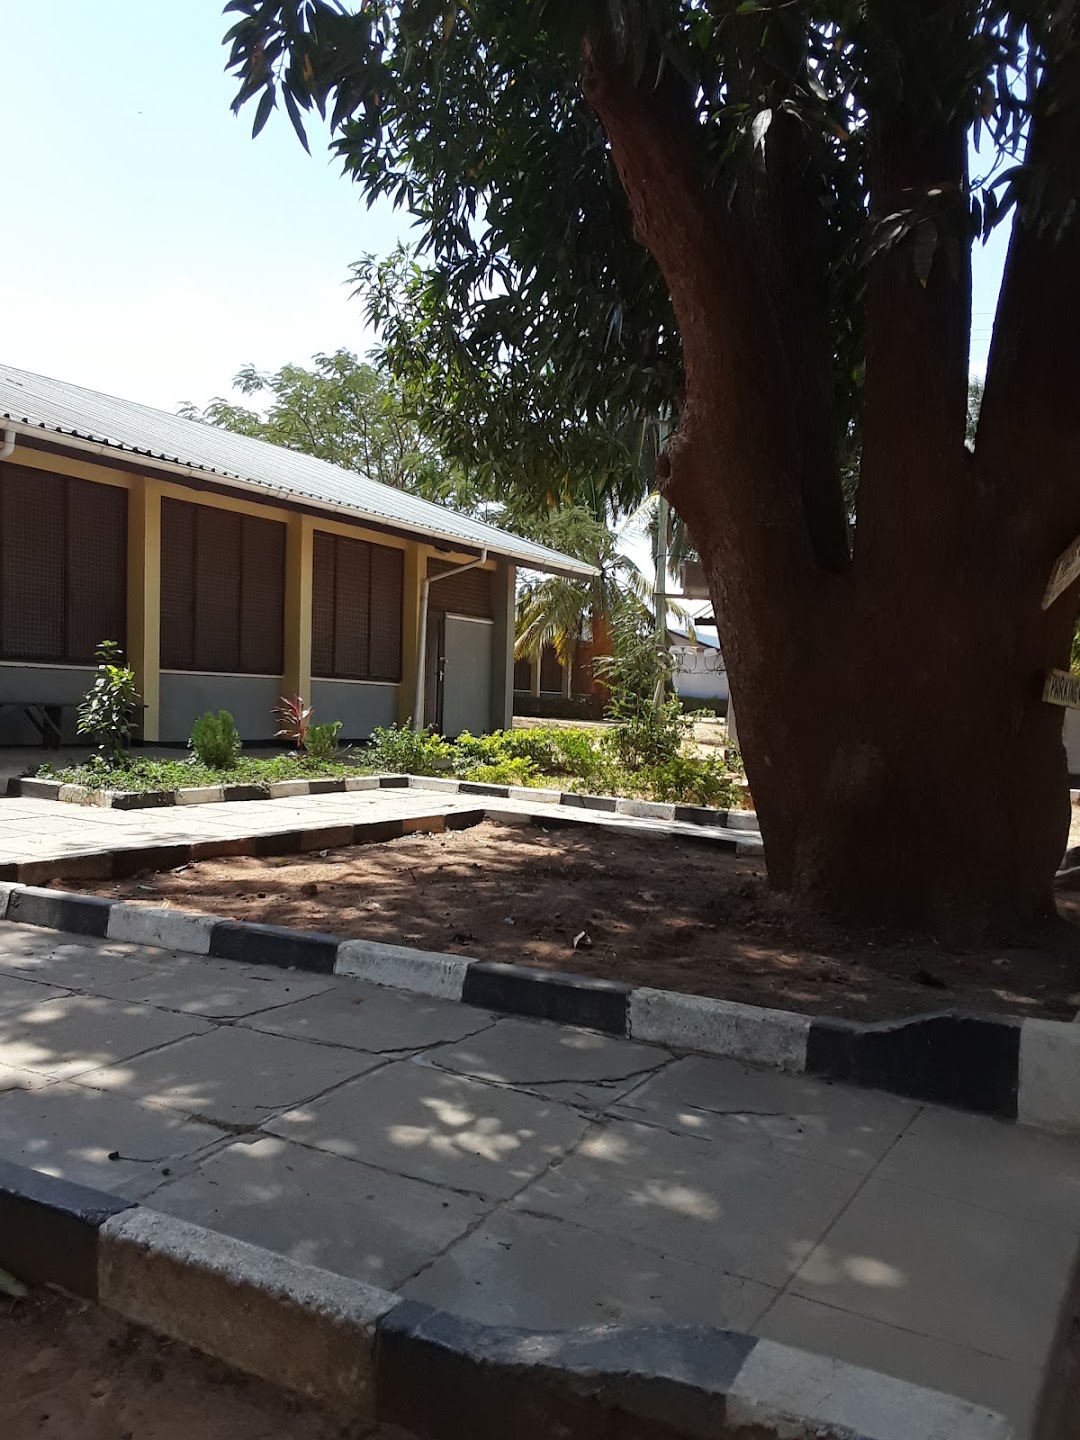 Mtwara Technical Secondary School